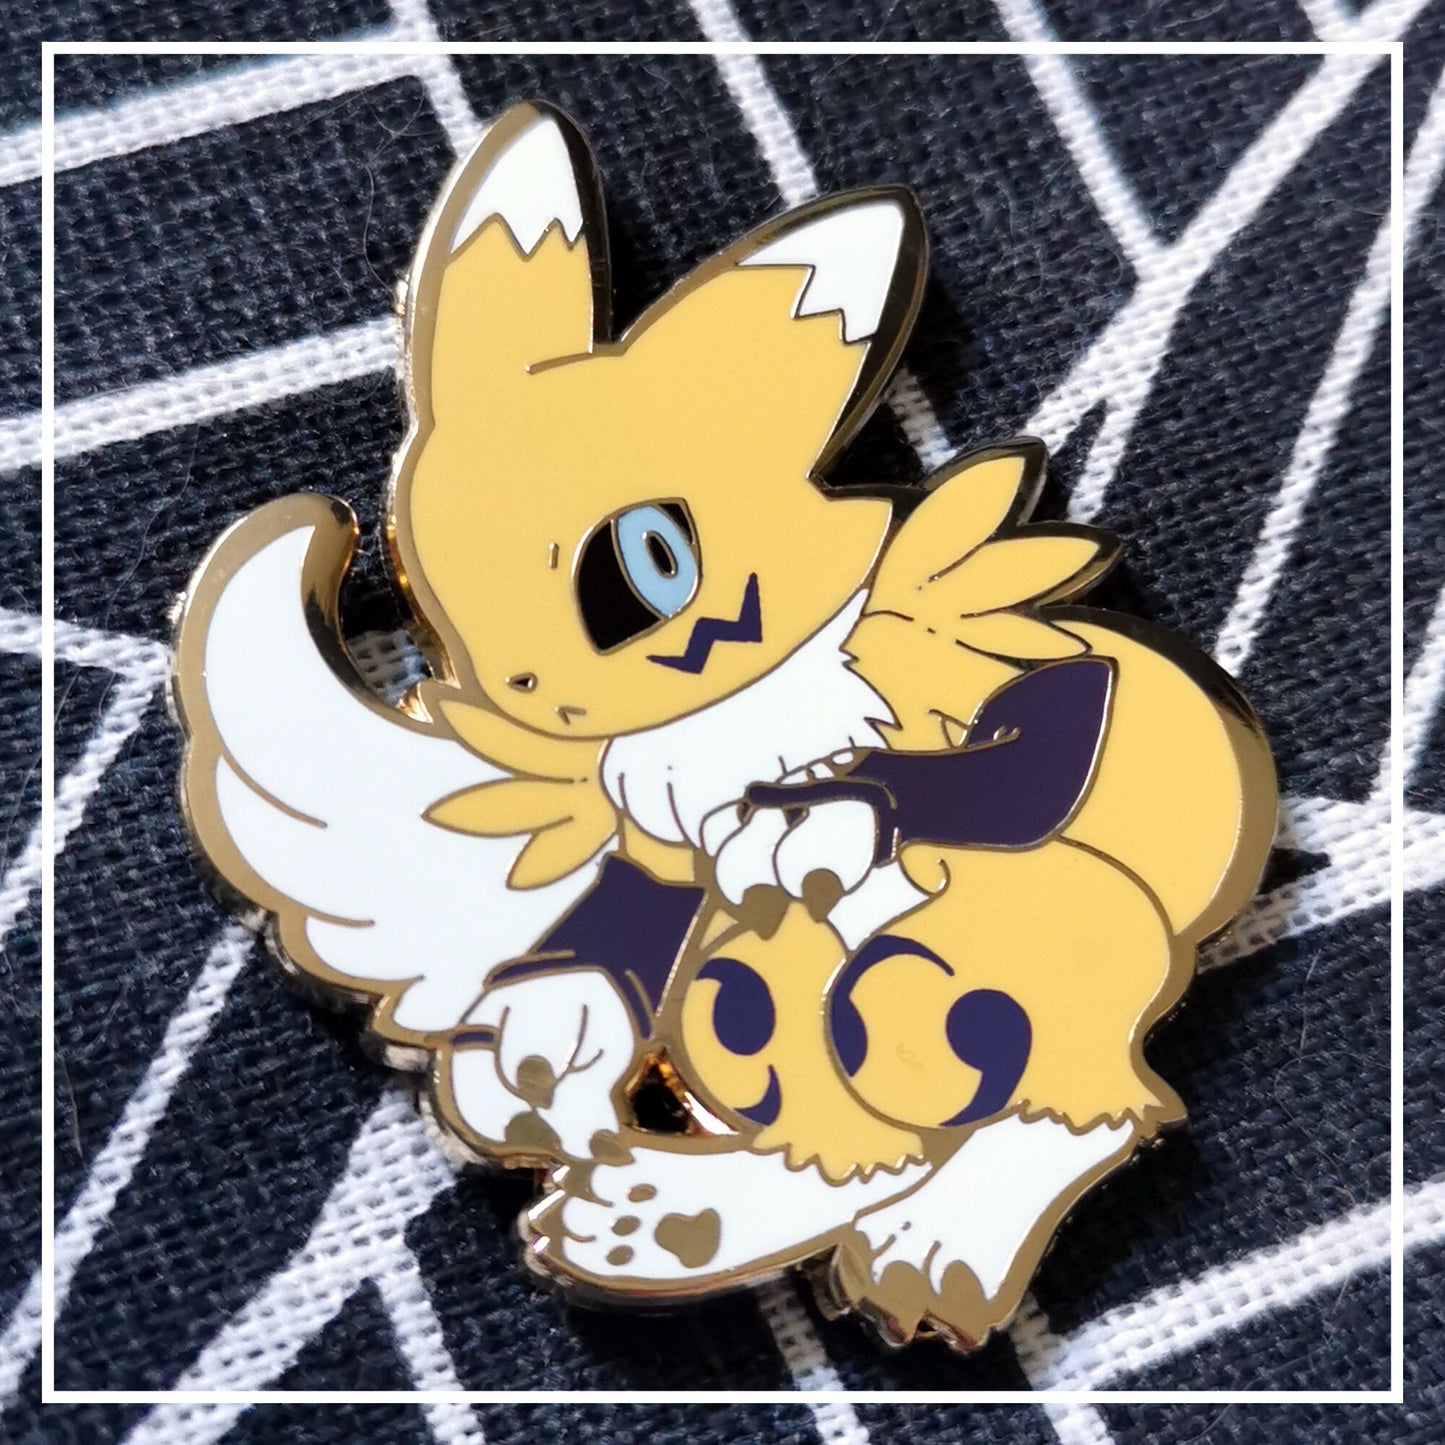 Renamon Hard Enamel Pin – Cute Digimon Fanart Pin